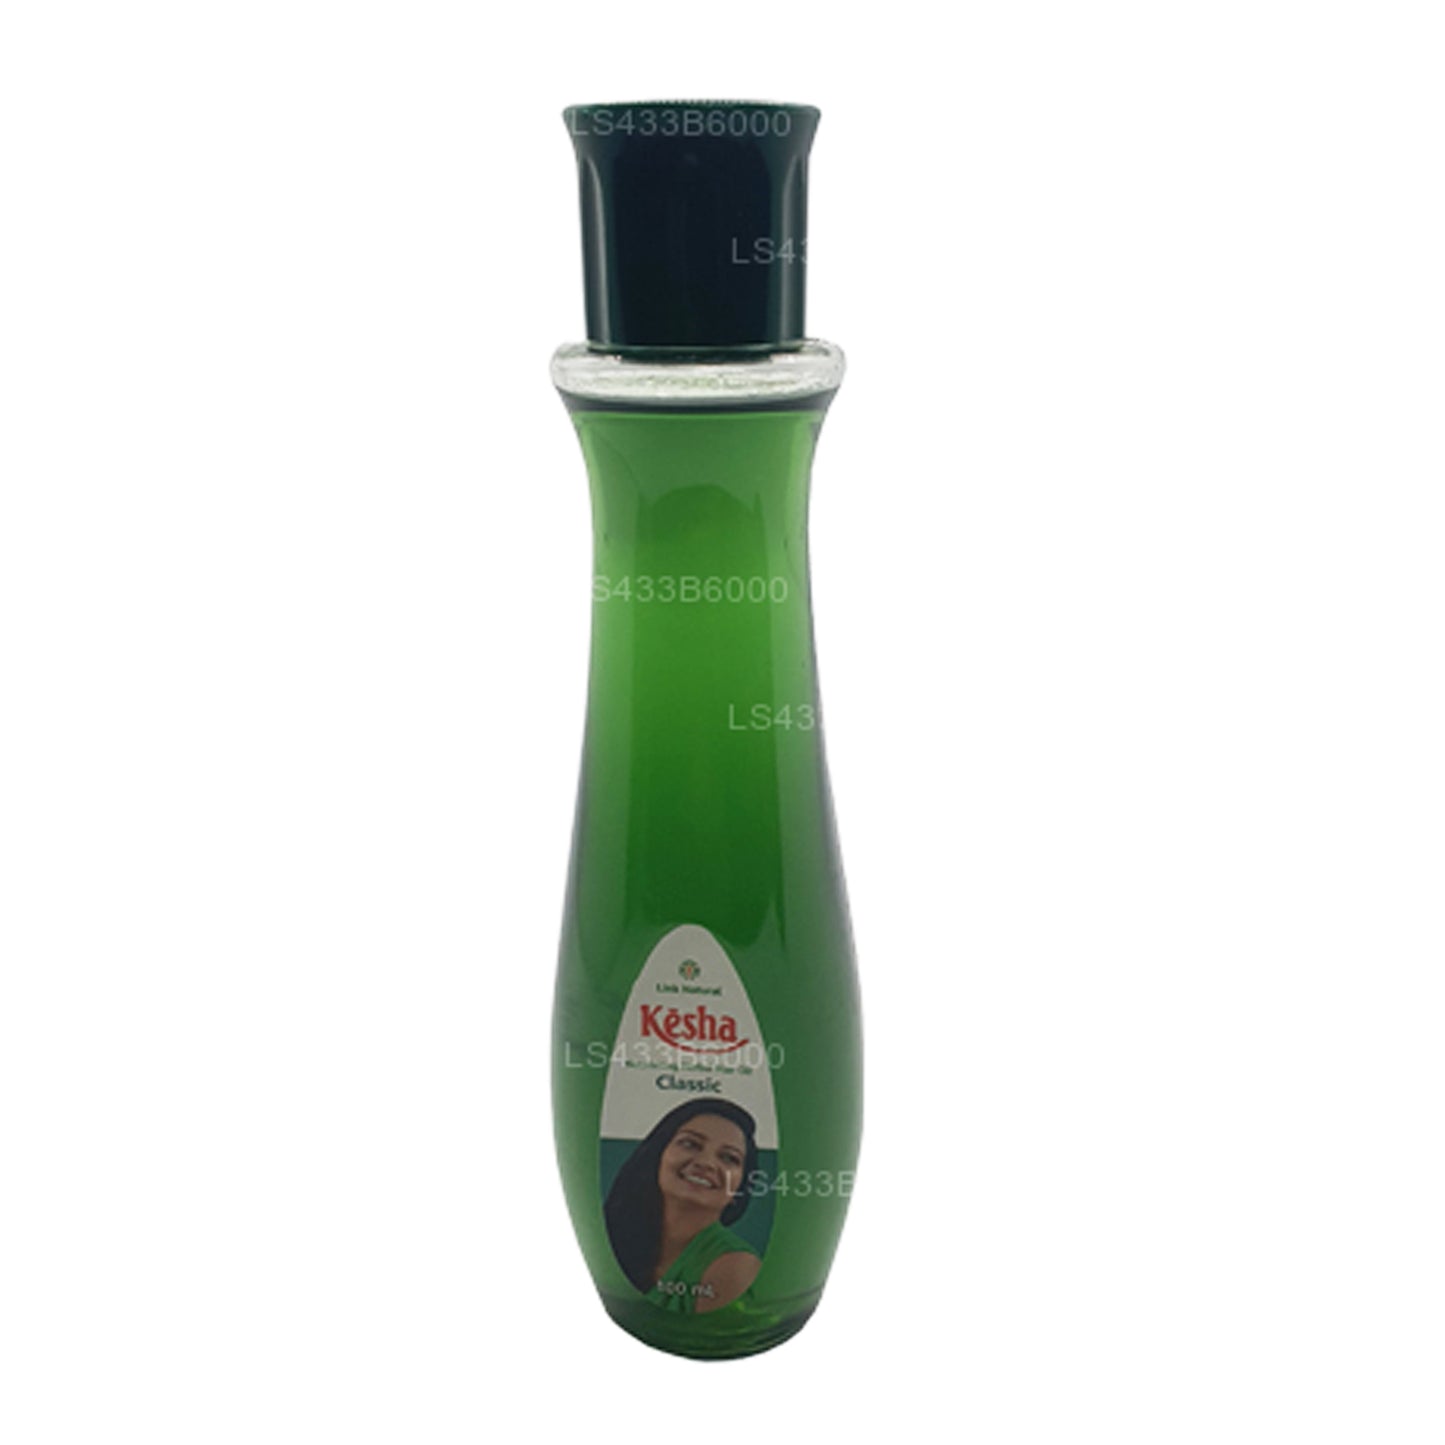 Link Natural Kesha Nourishing Herbal Hair Oil (100ml)